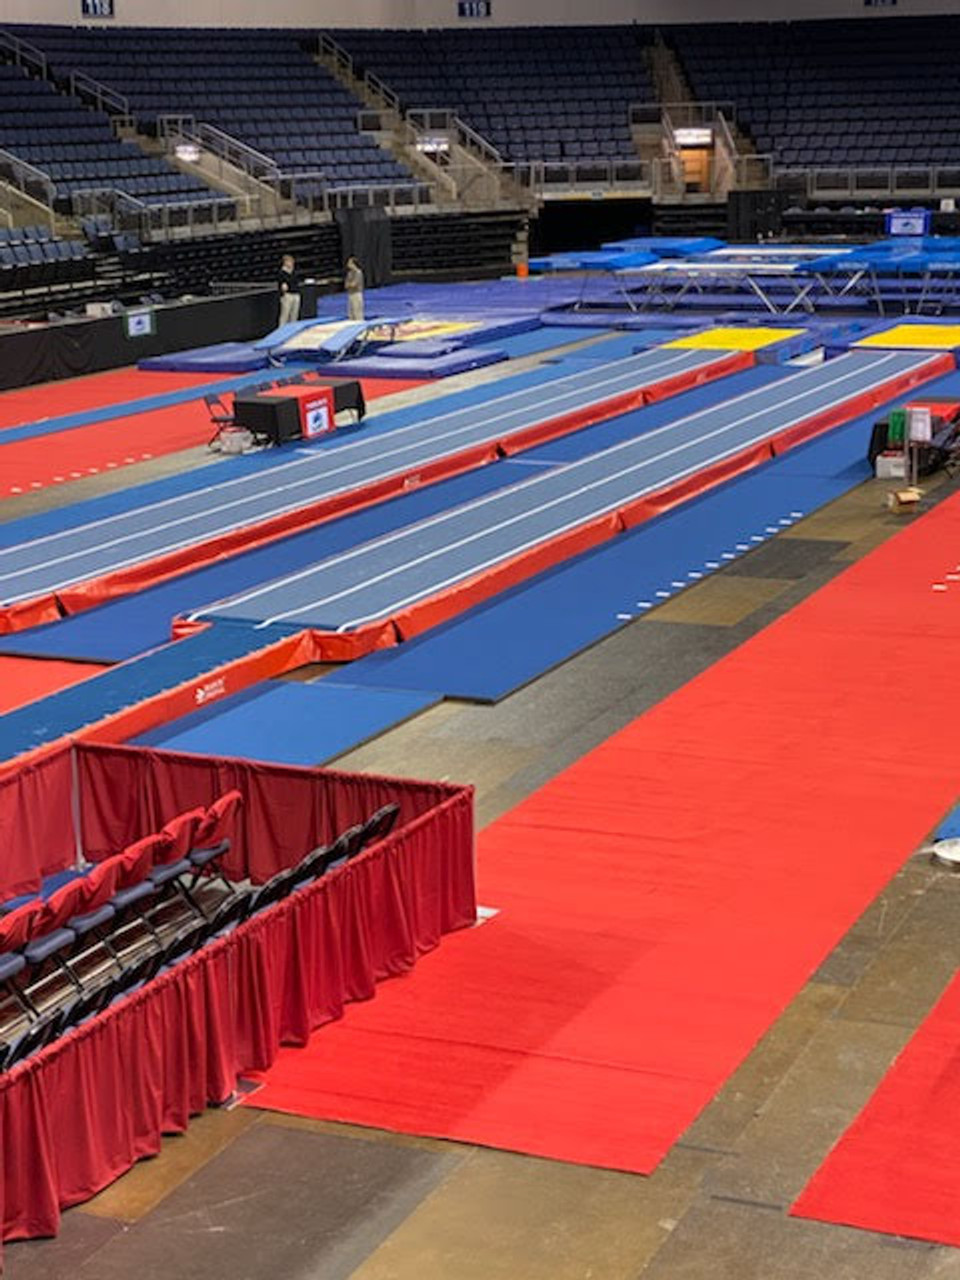 Carpet Bonded Foam - American Athletic, Inc